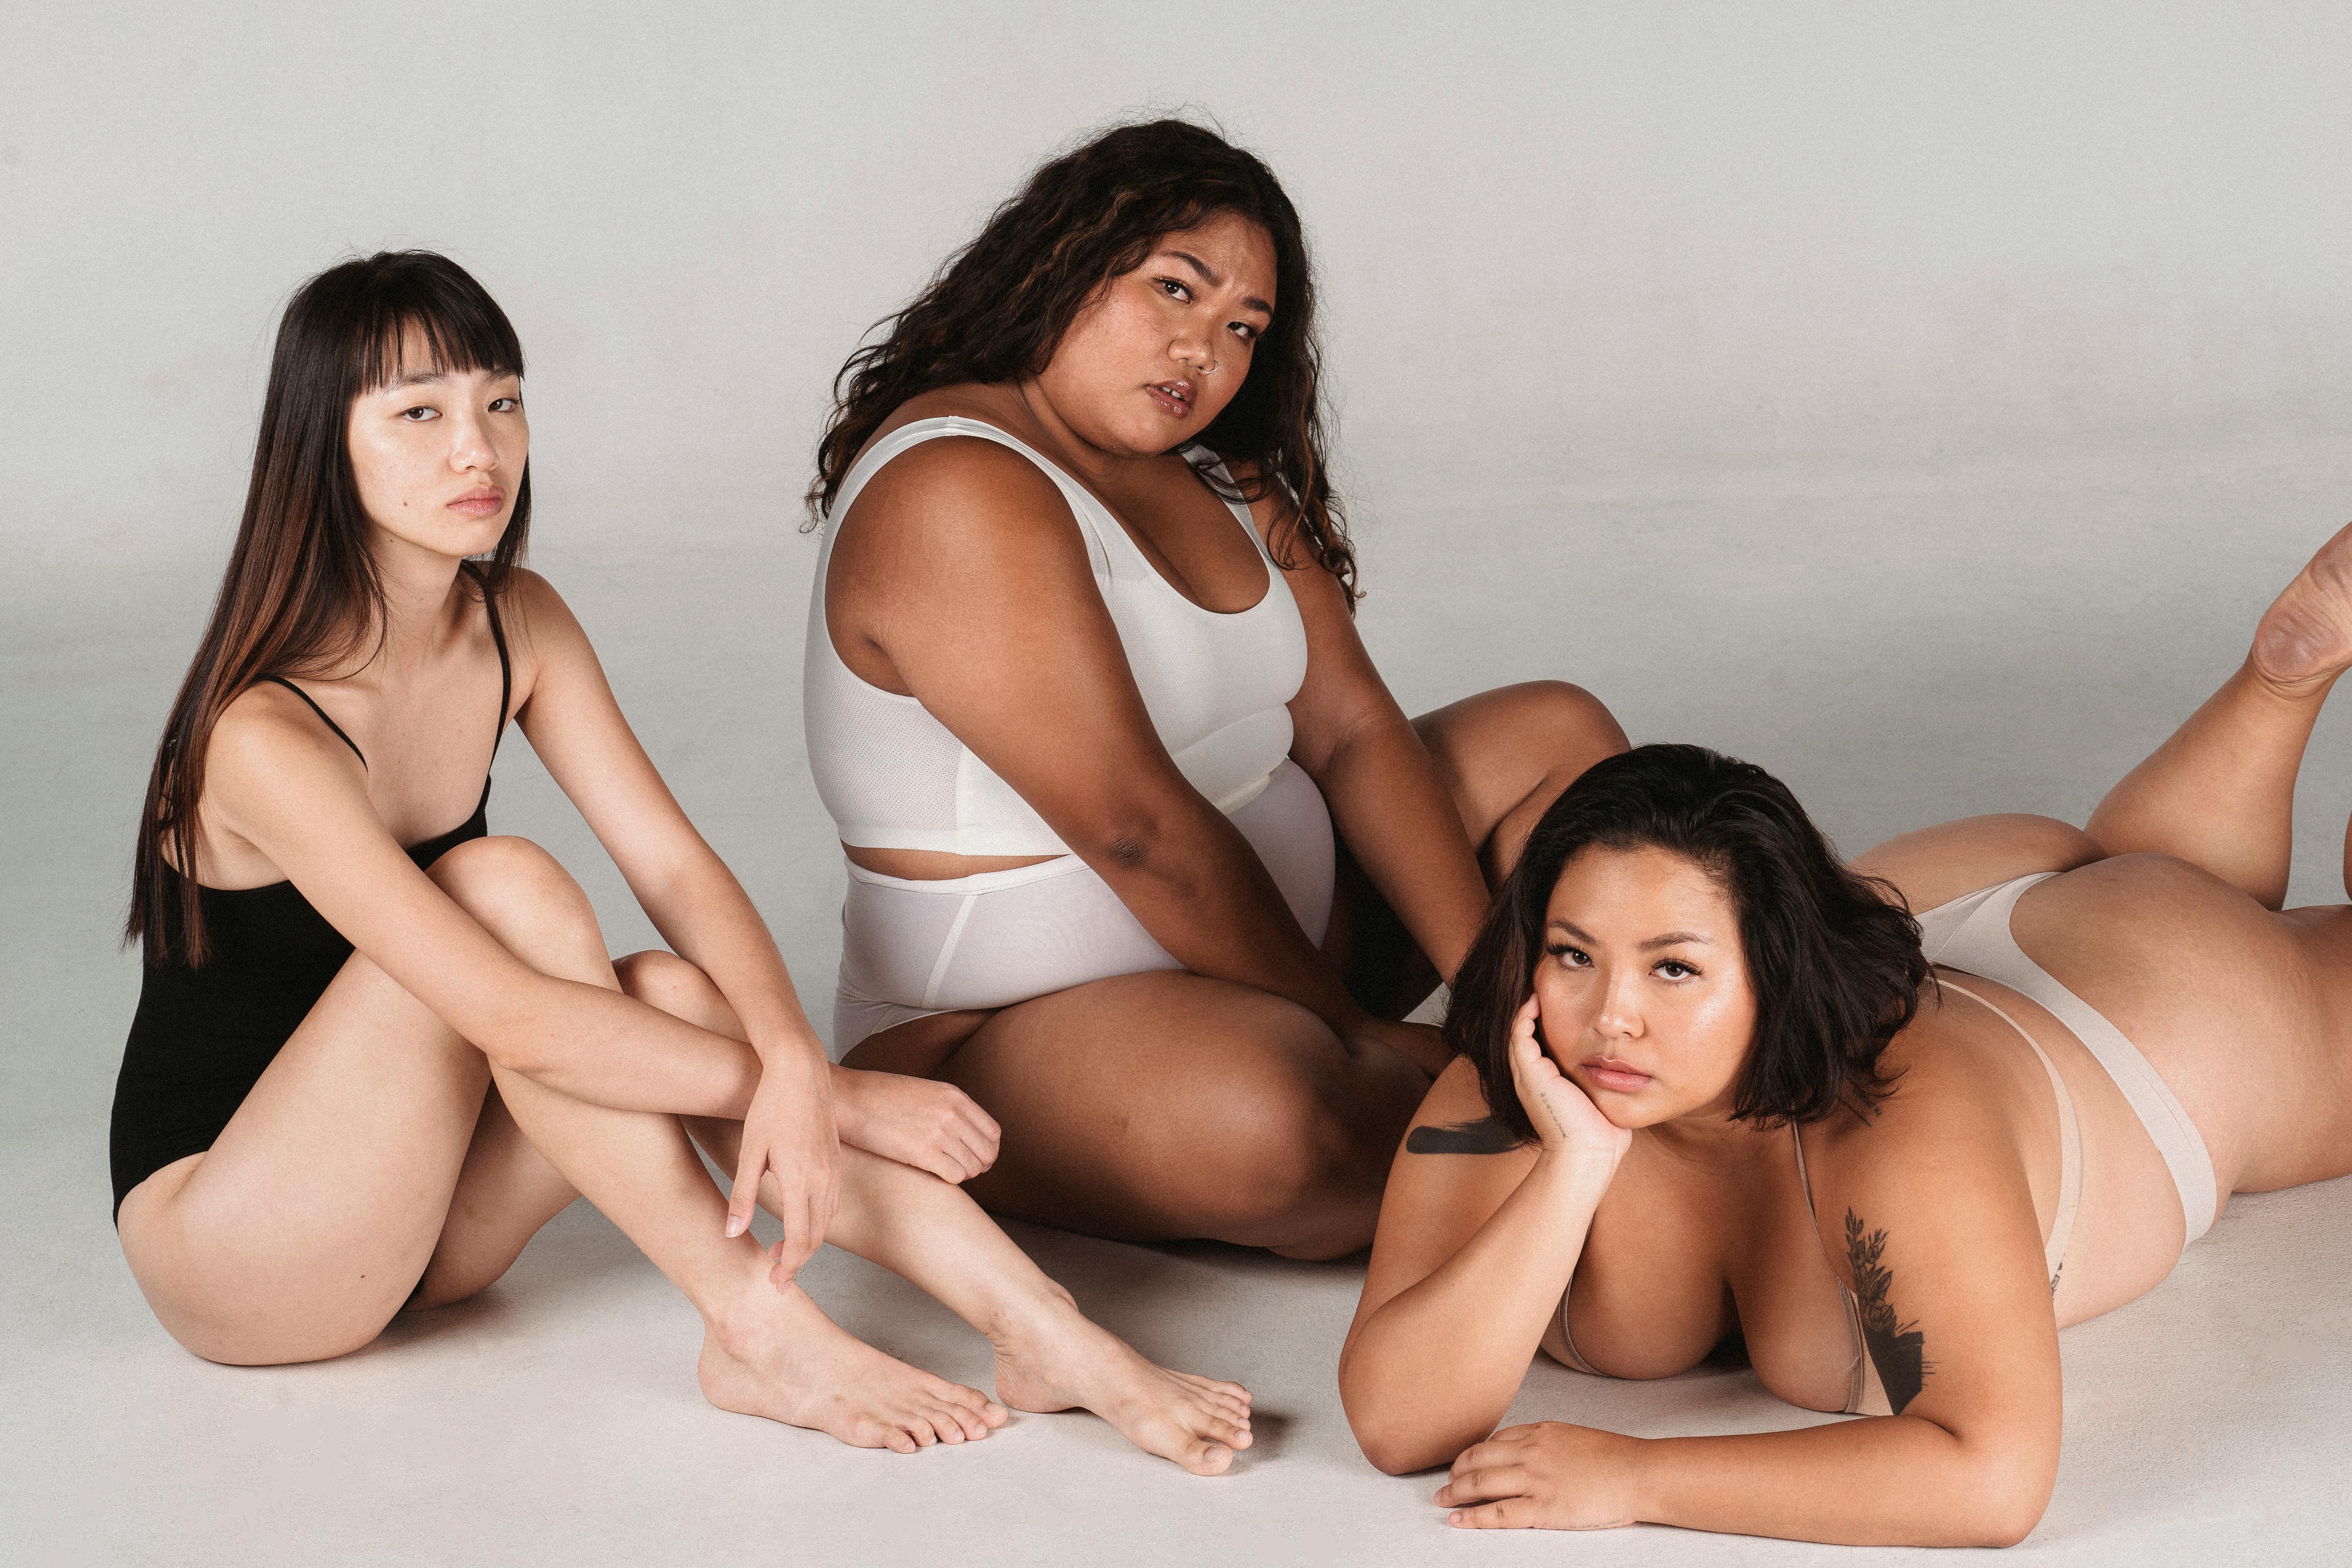 Relaxed Asian women in lingerie on floor · Free Stock Photo